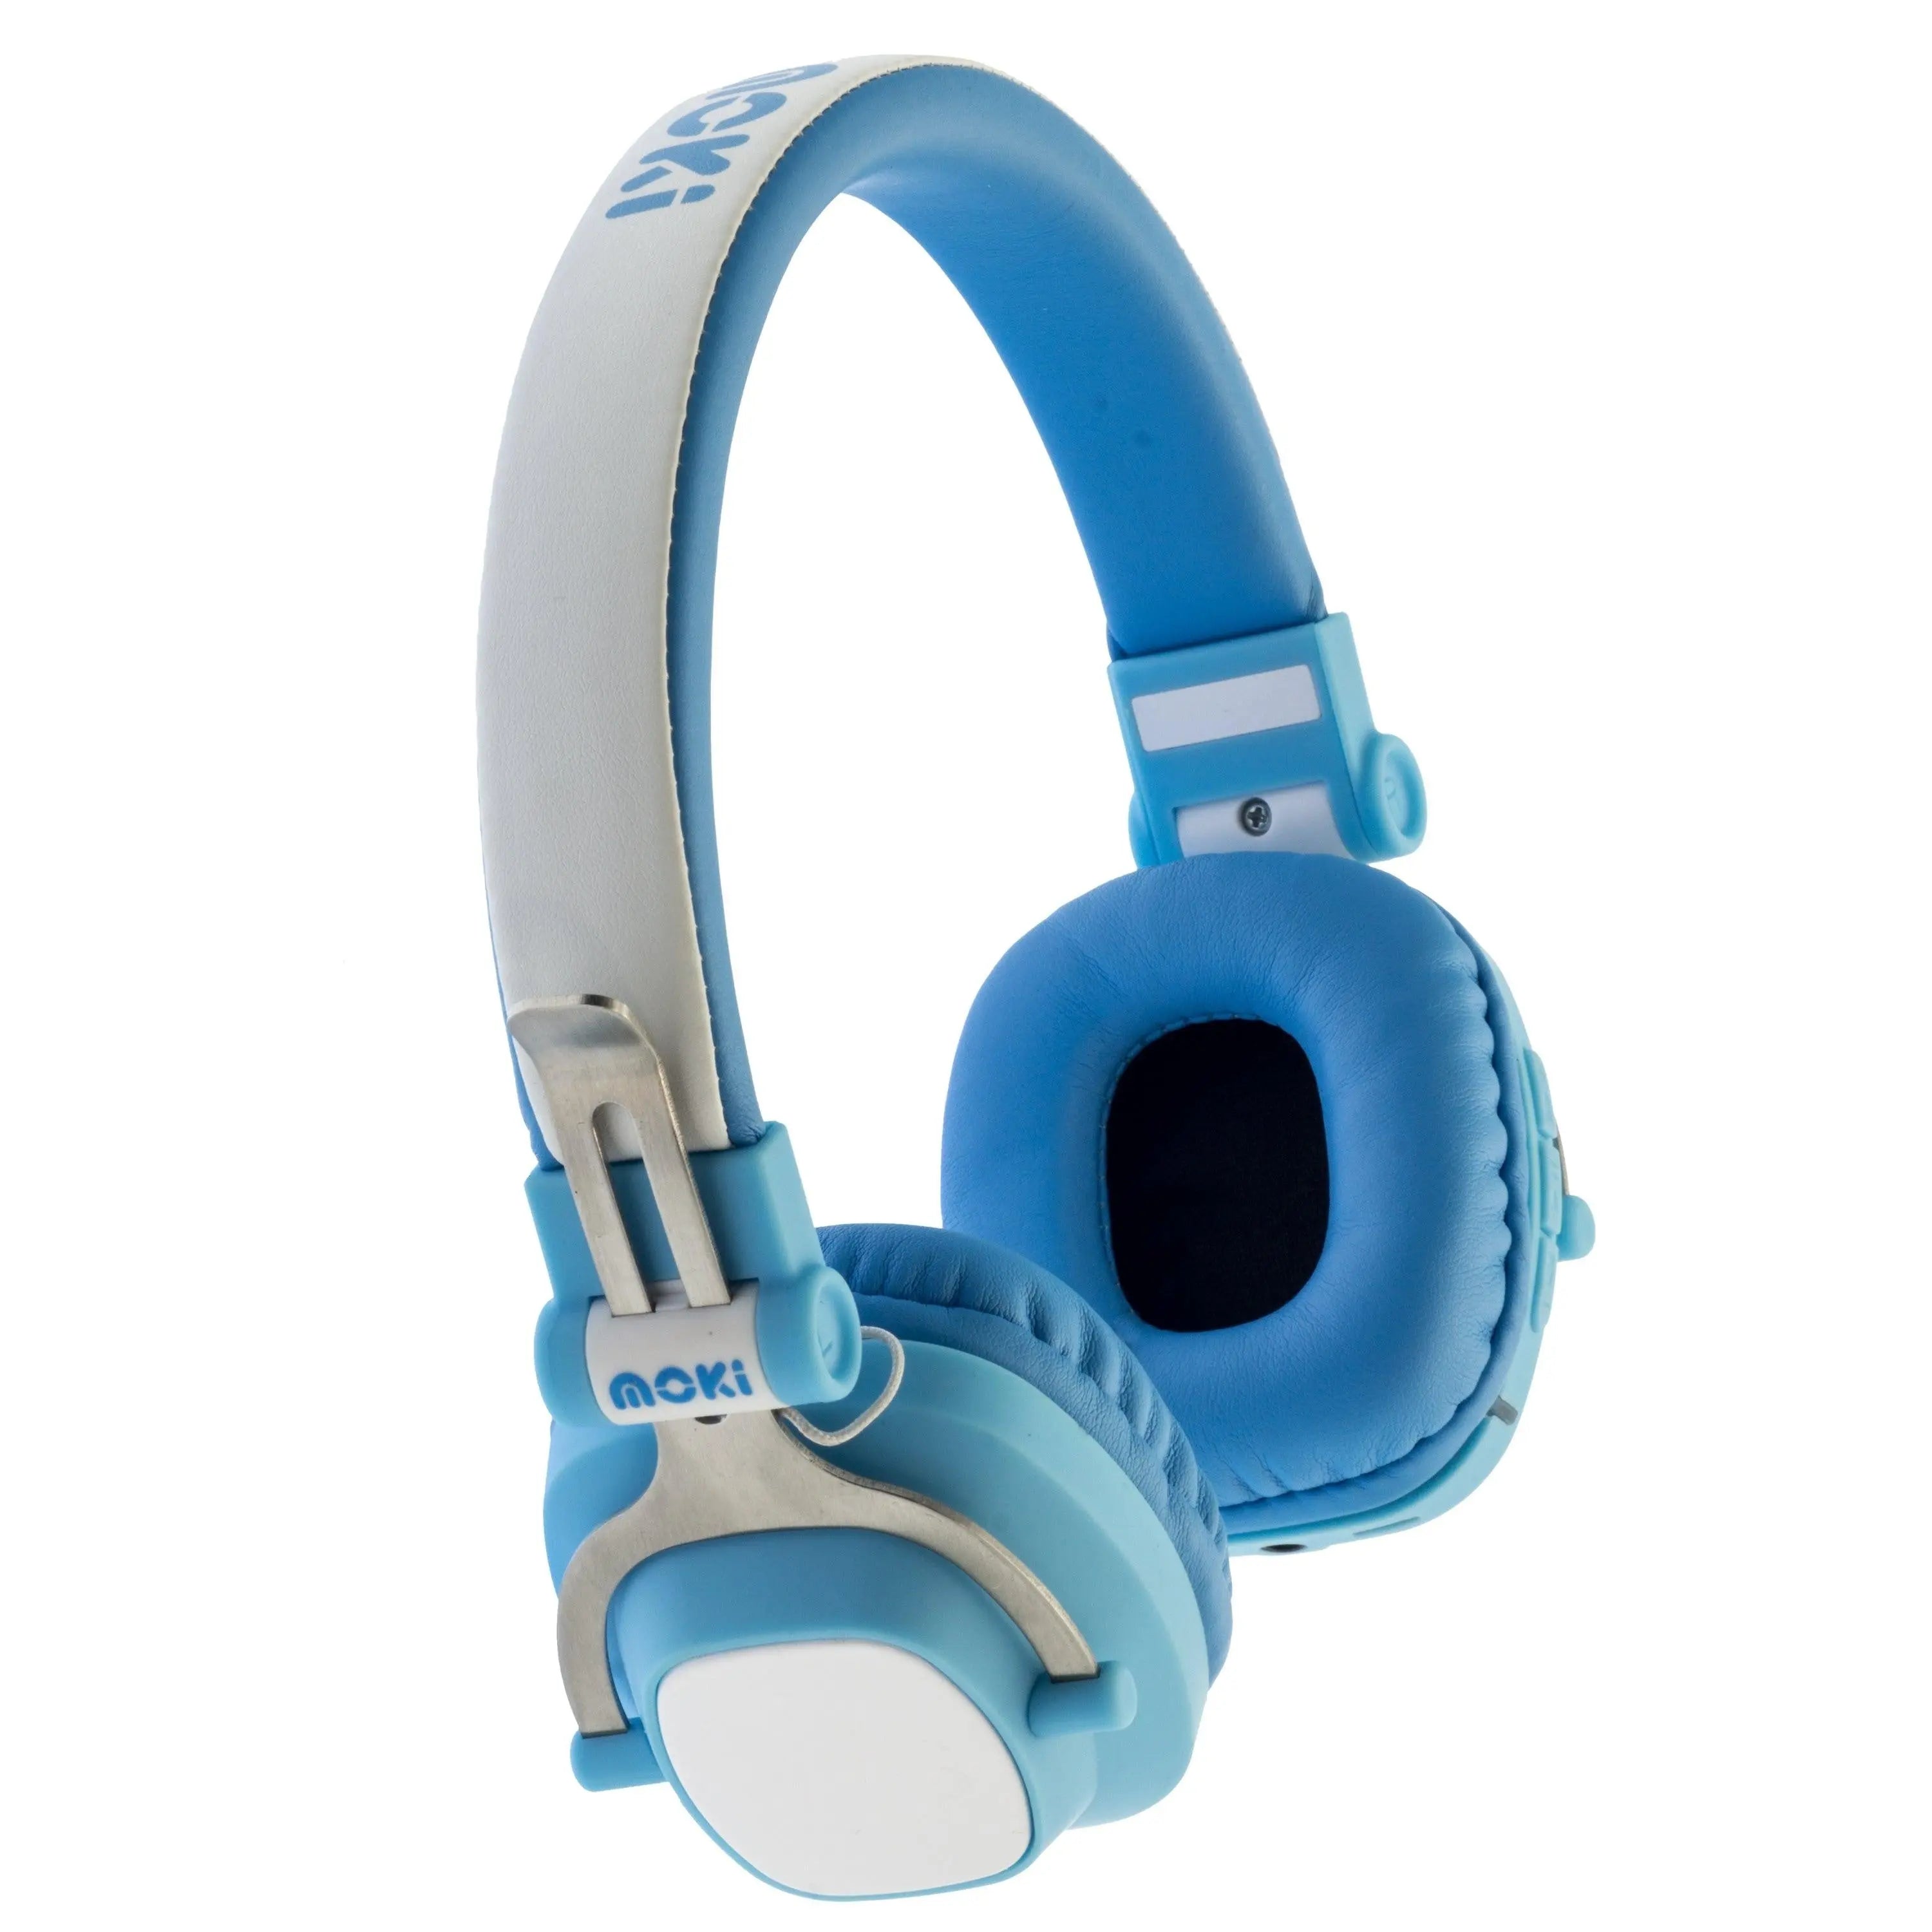 MOKI Exo Kids Bluetooth Headphone - Blue MOKI